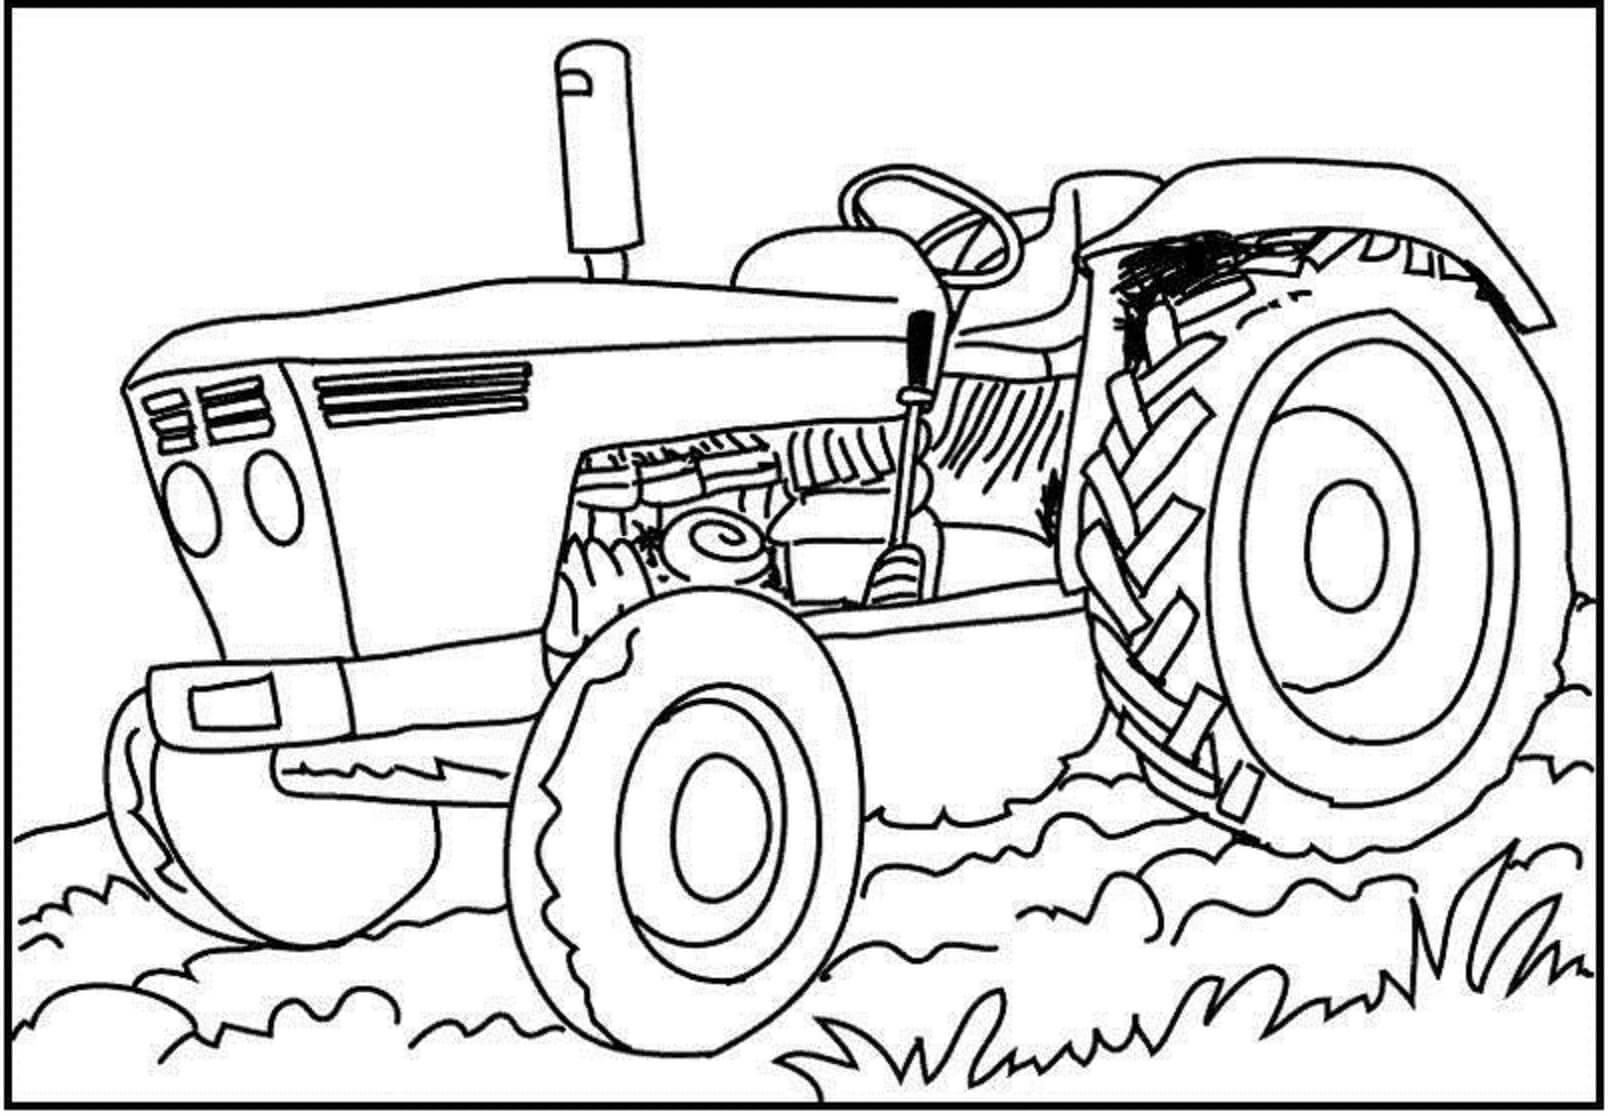 Fin Traktor fargelegging